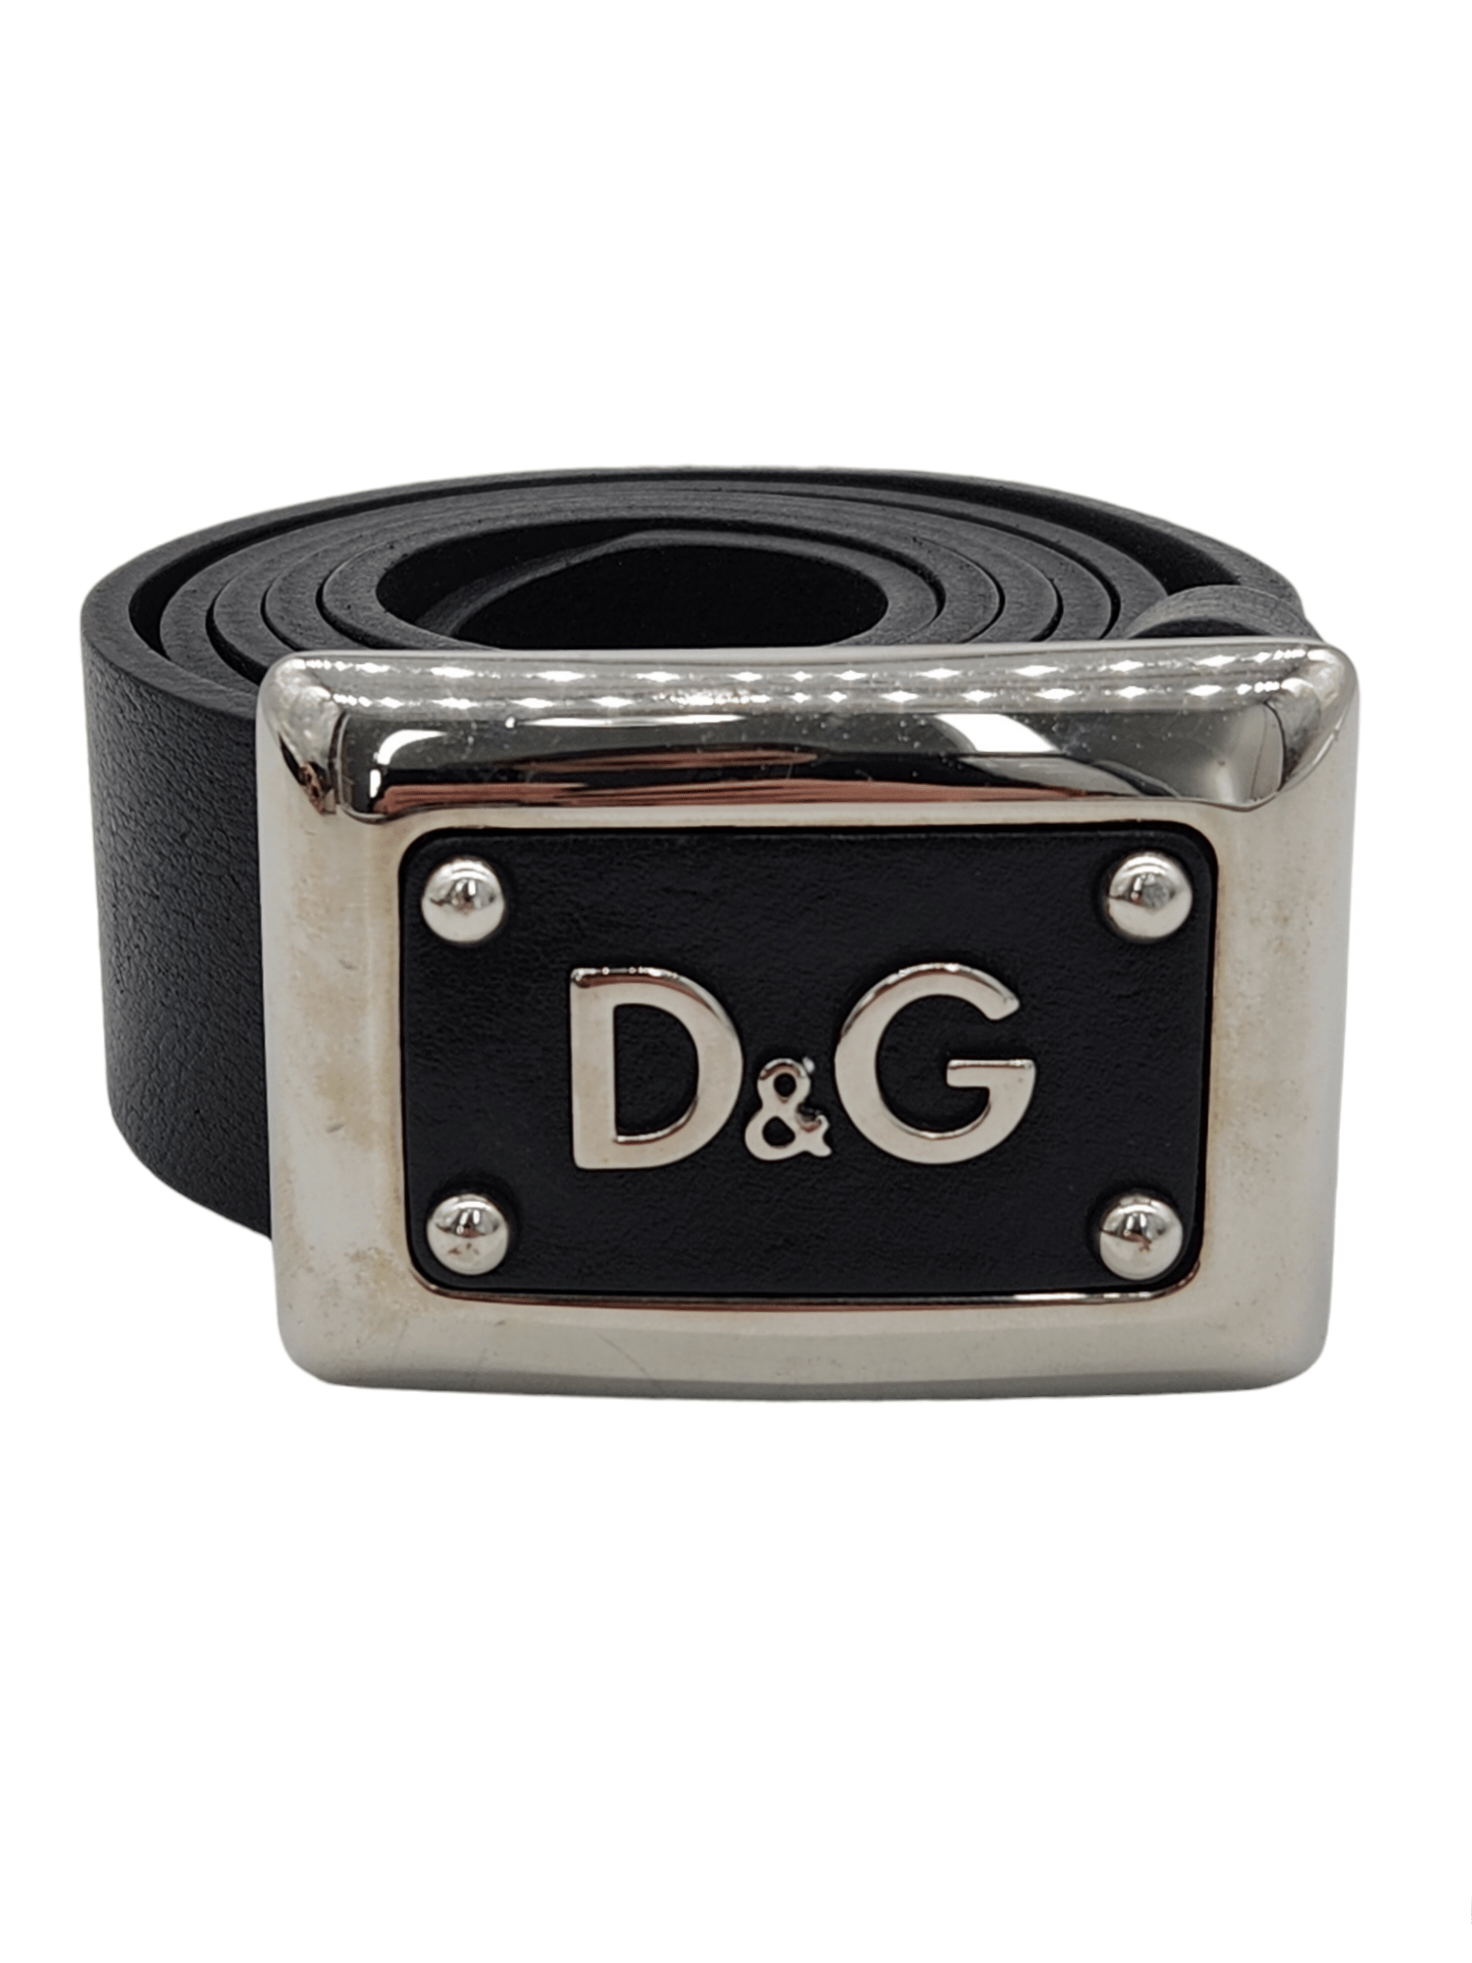 Dolce Gabbana Black Leather Silver DG Logo Belt 95